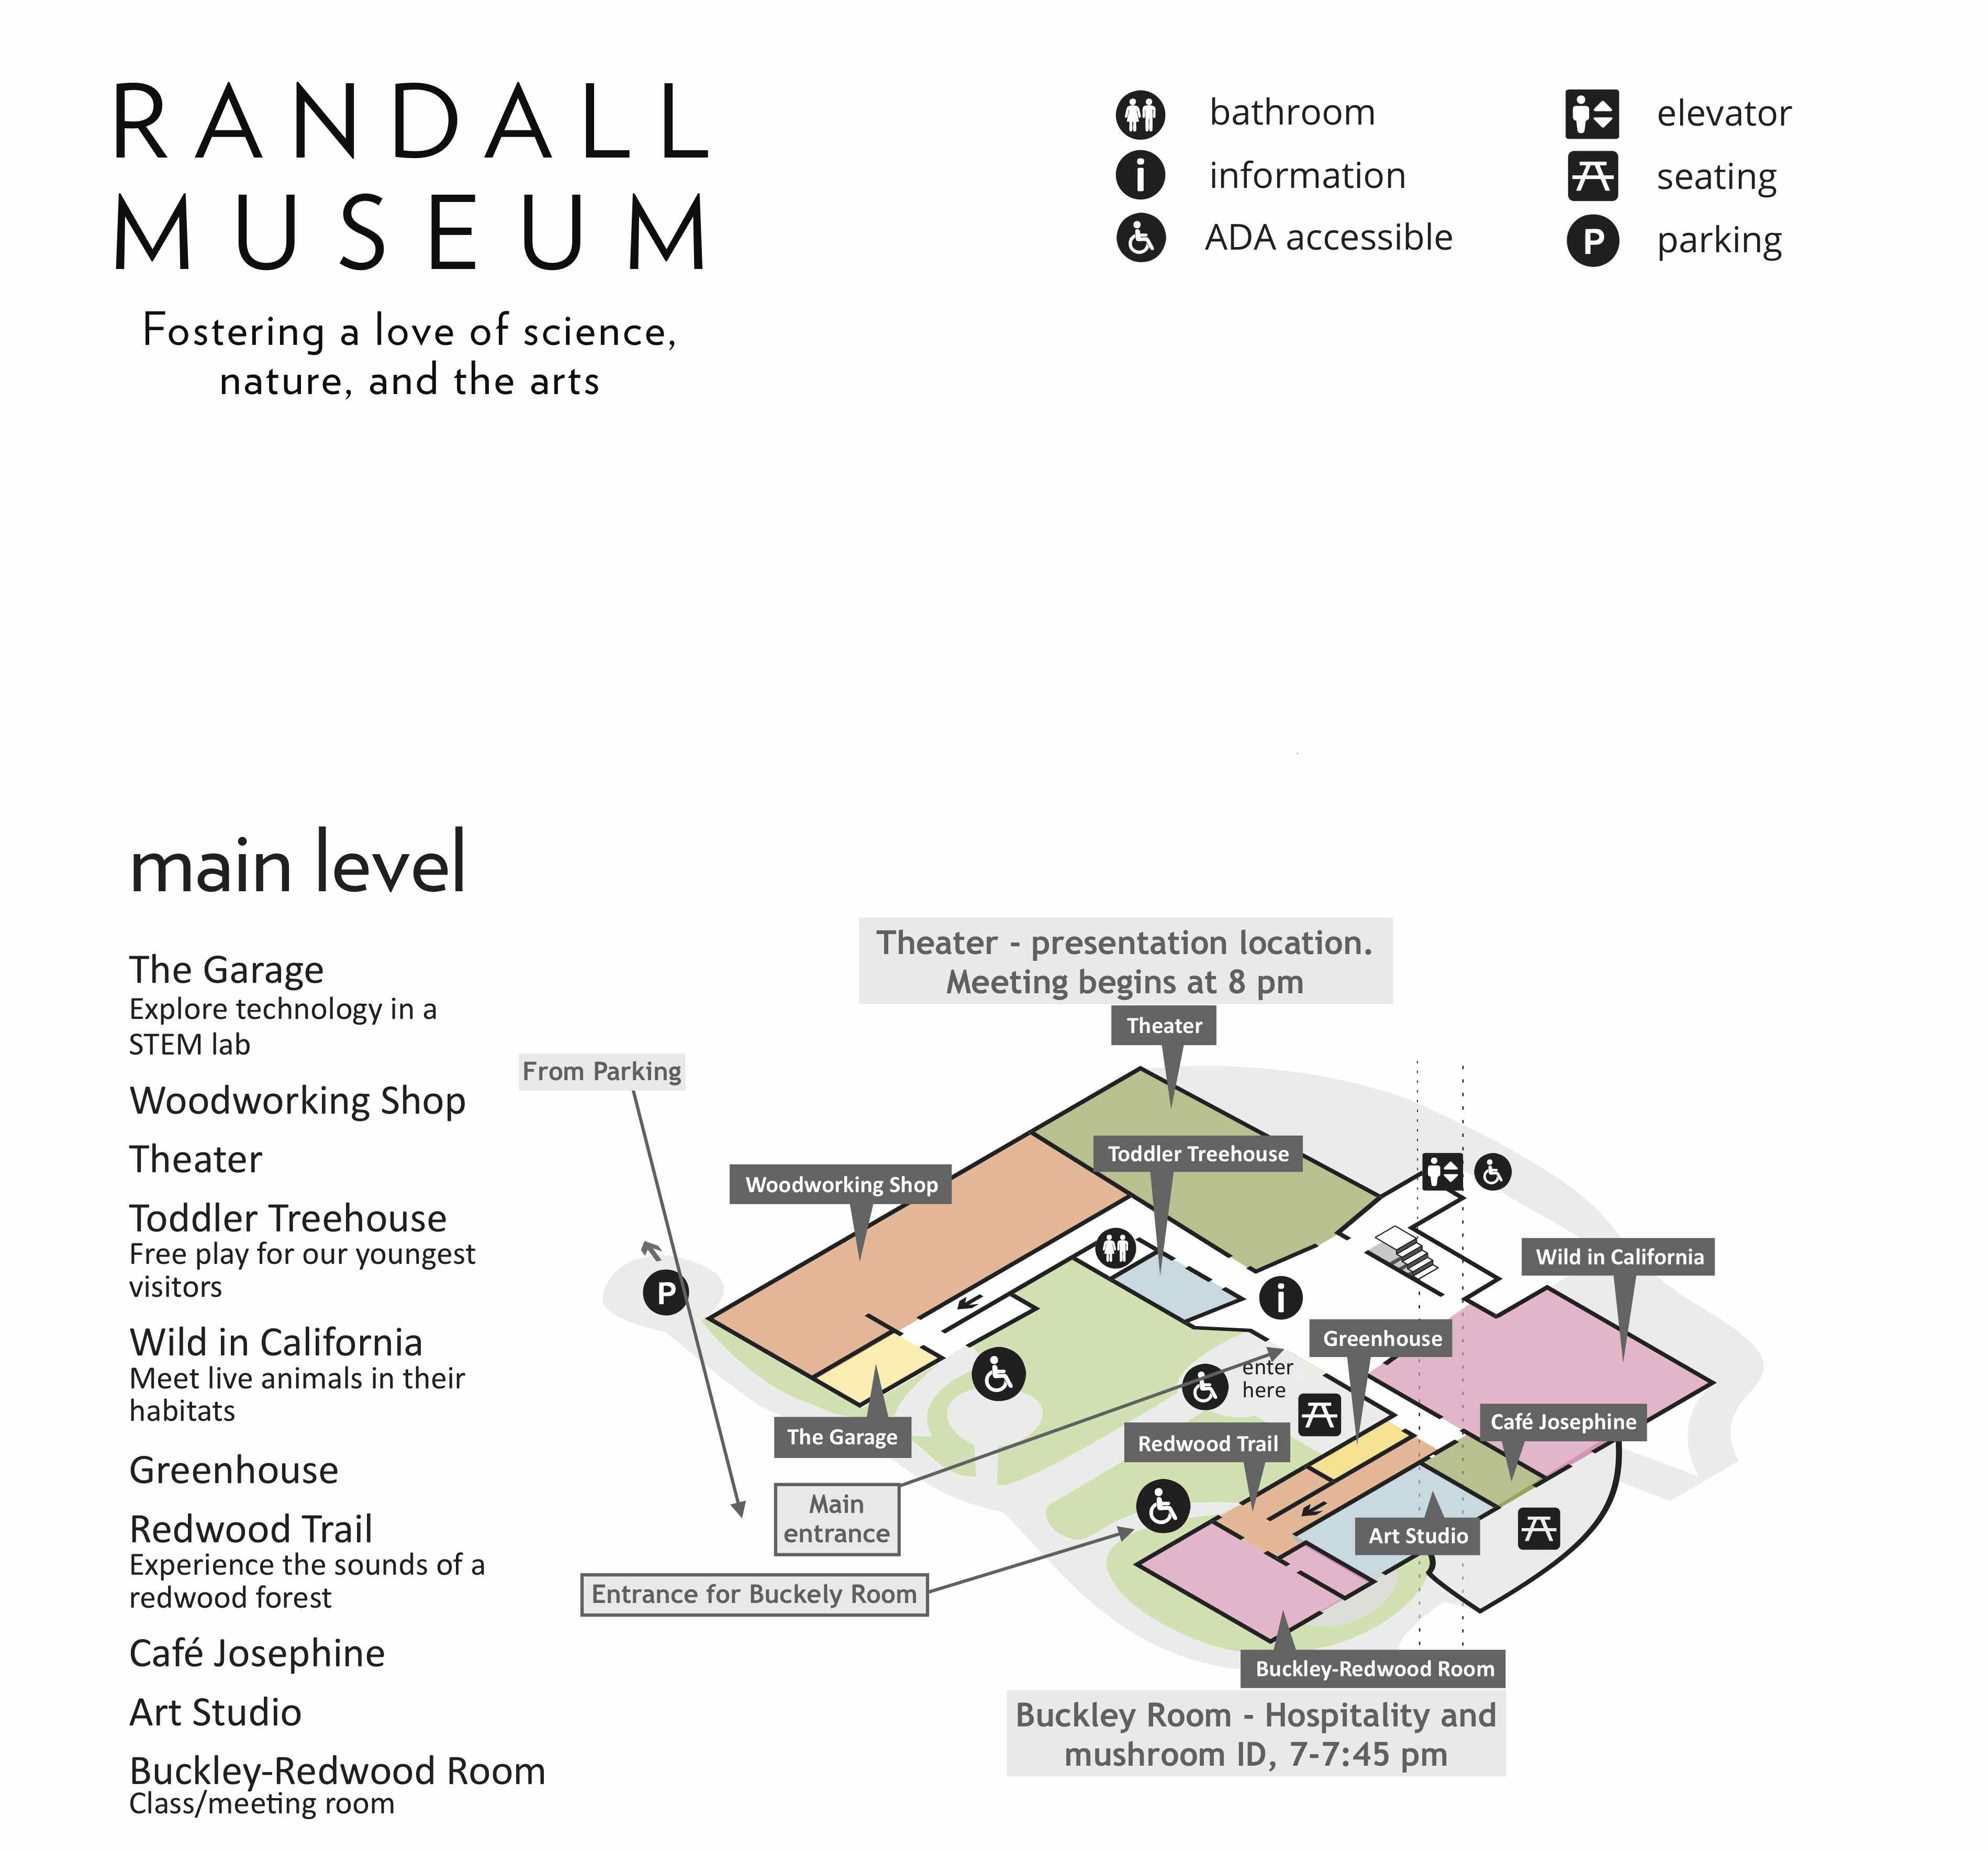 Randall Museum Floor Plan, main level